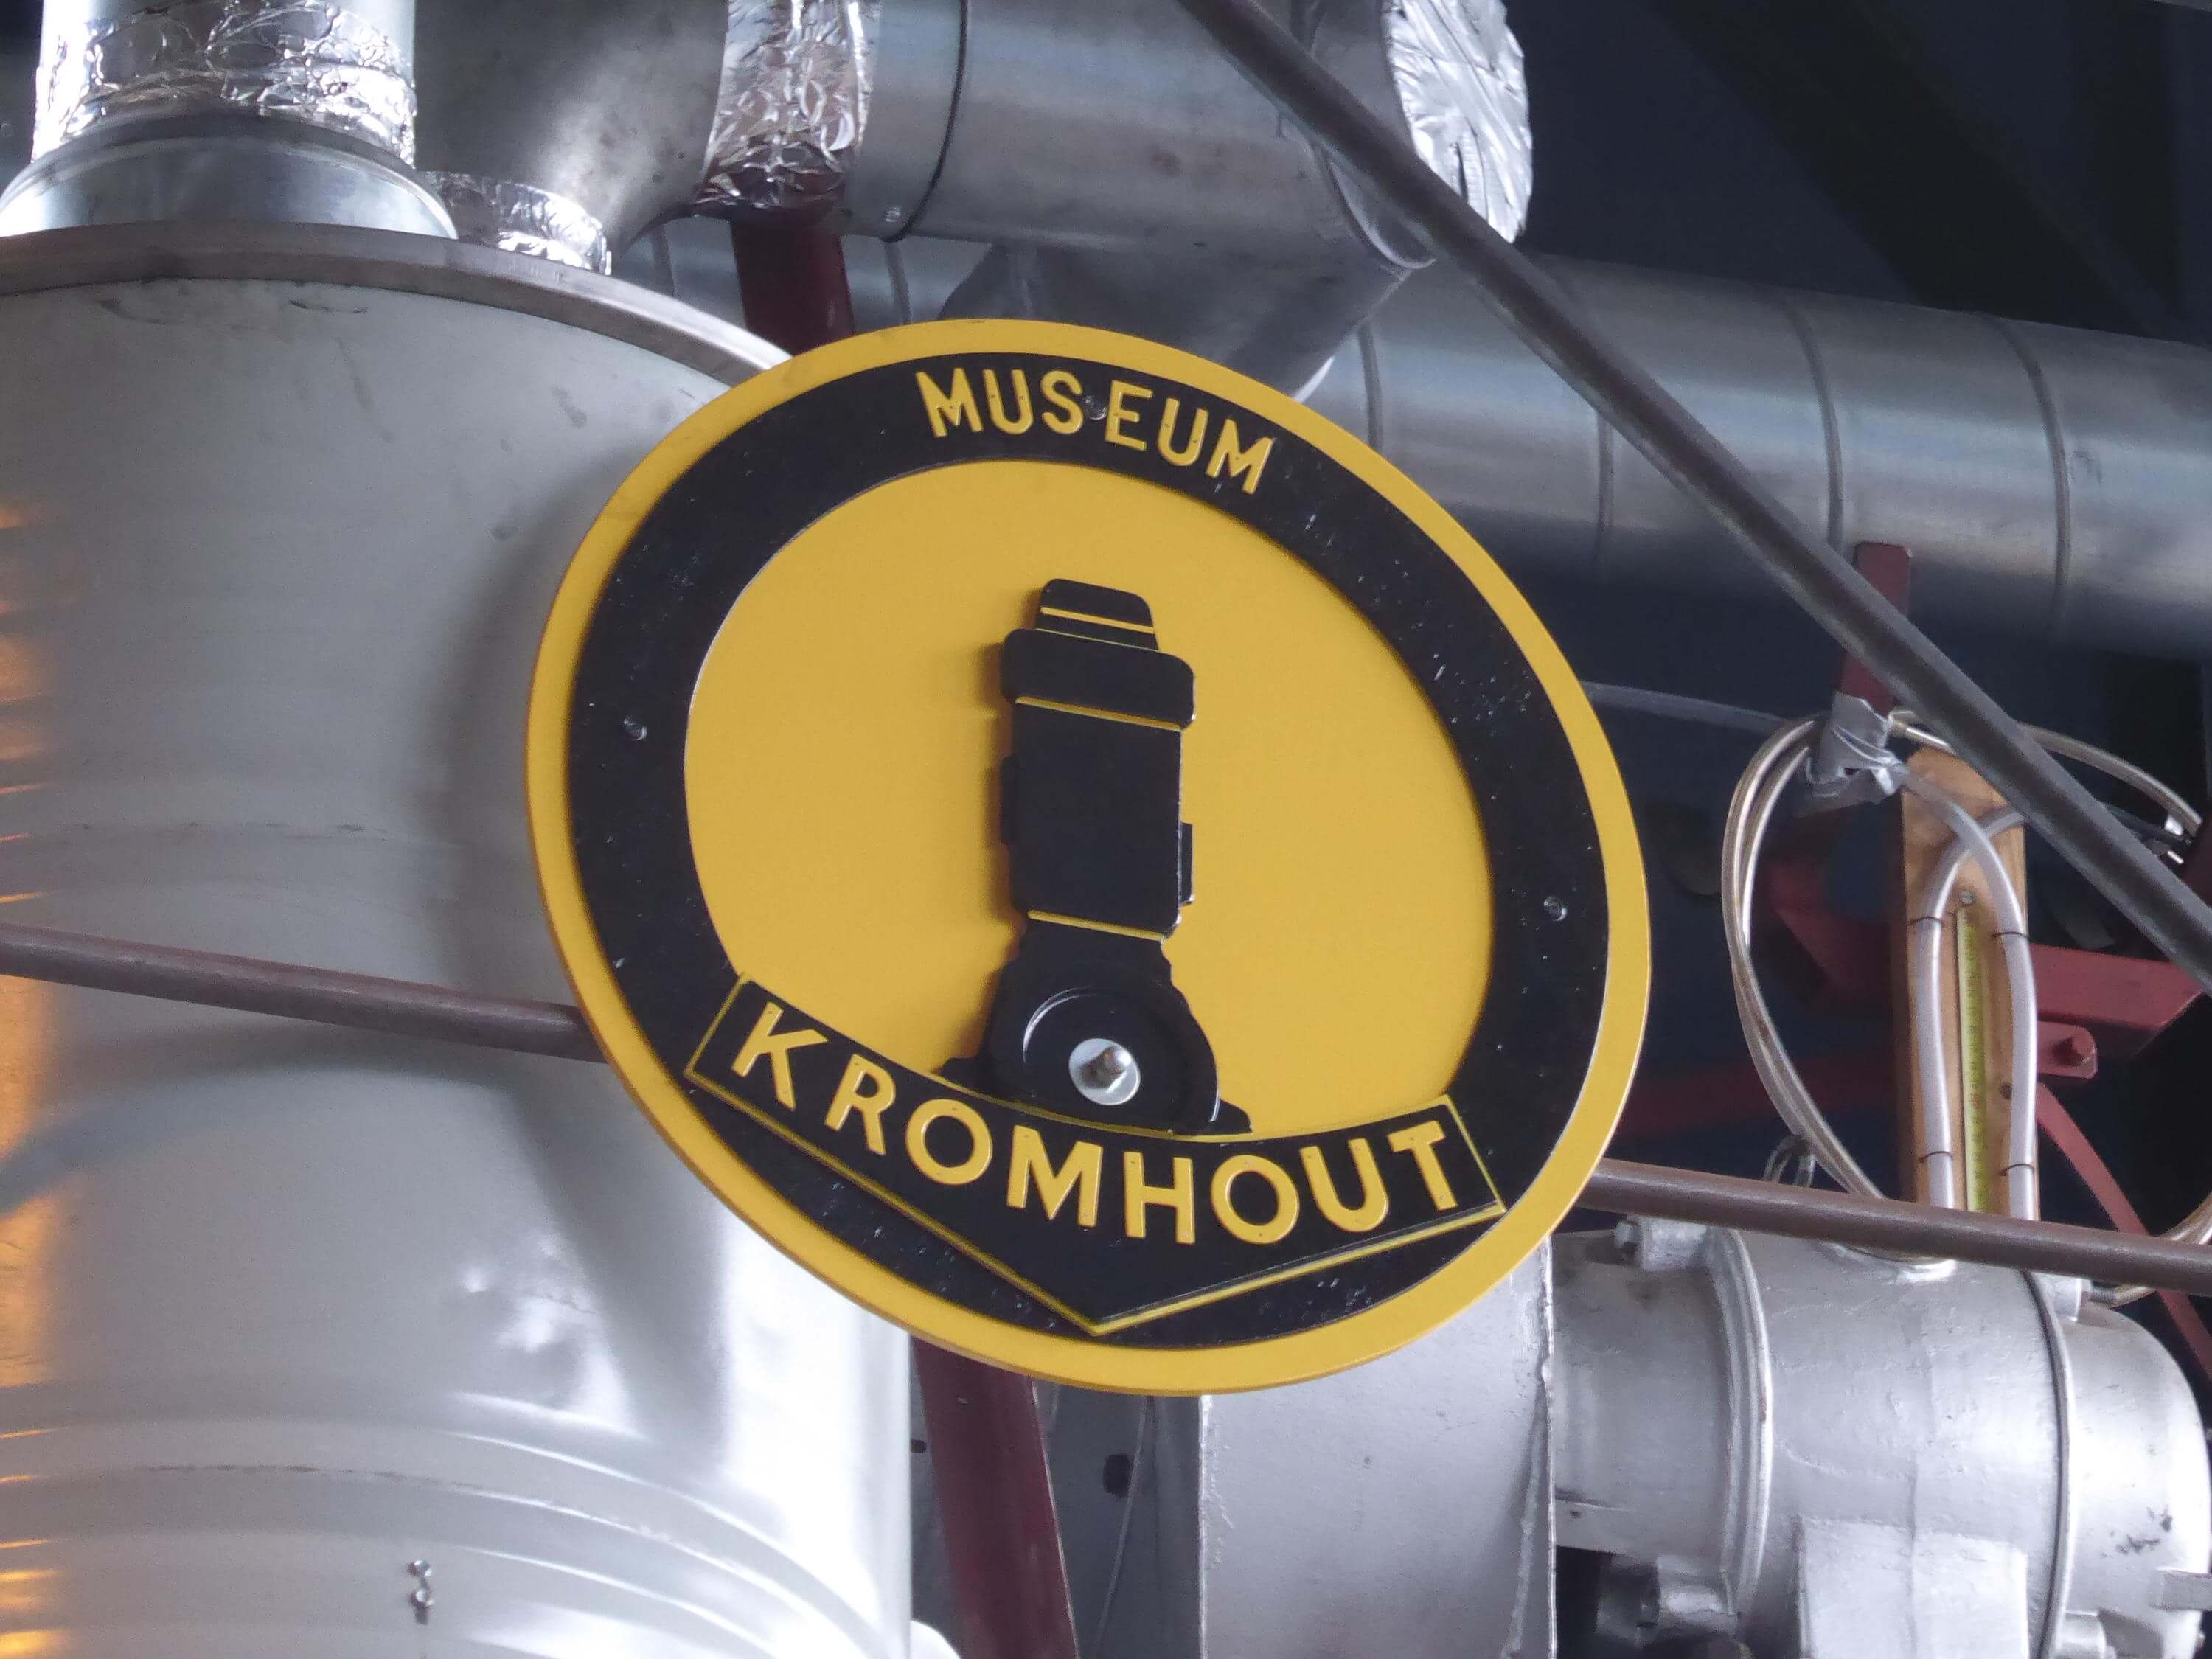 Steam engine at Museum Werf t'Kromhout